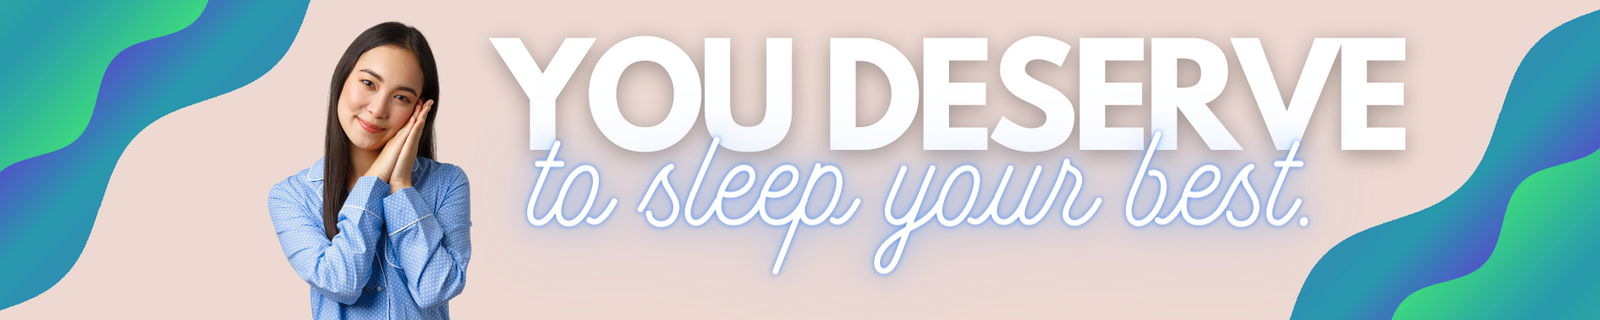 Sleep your best at Sleepology Mattress Shop